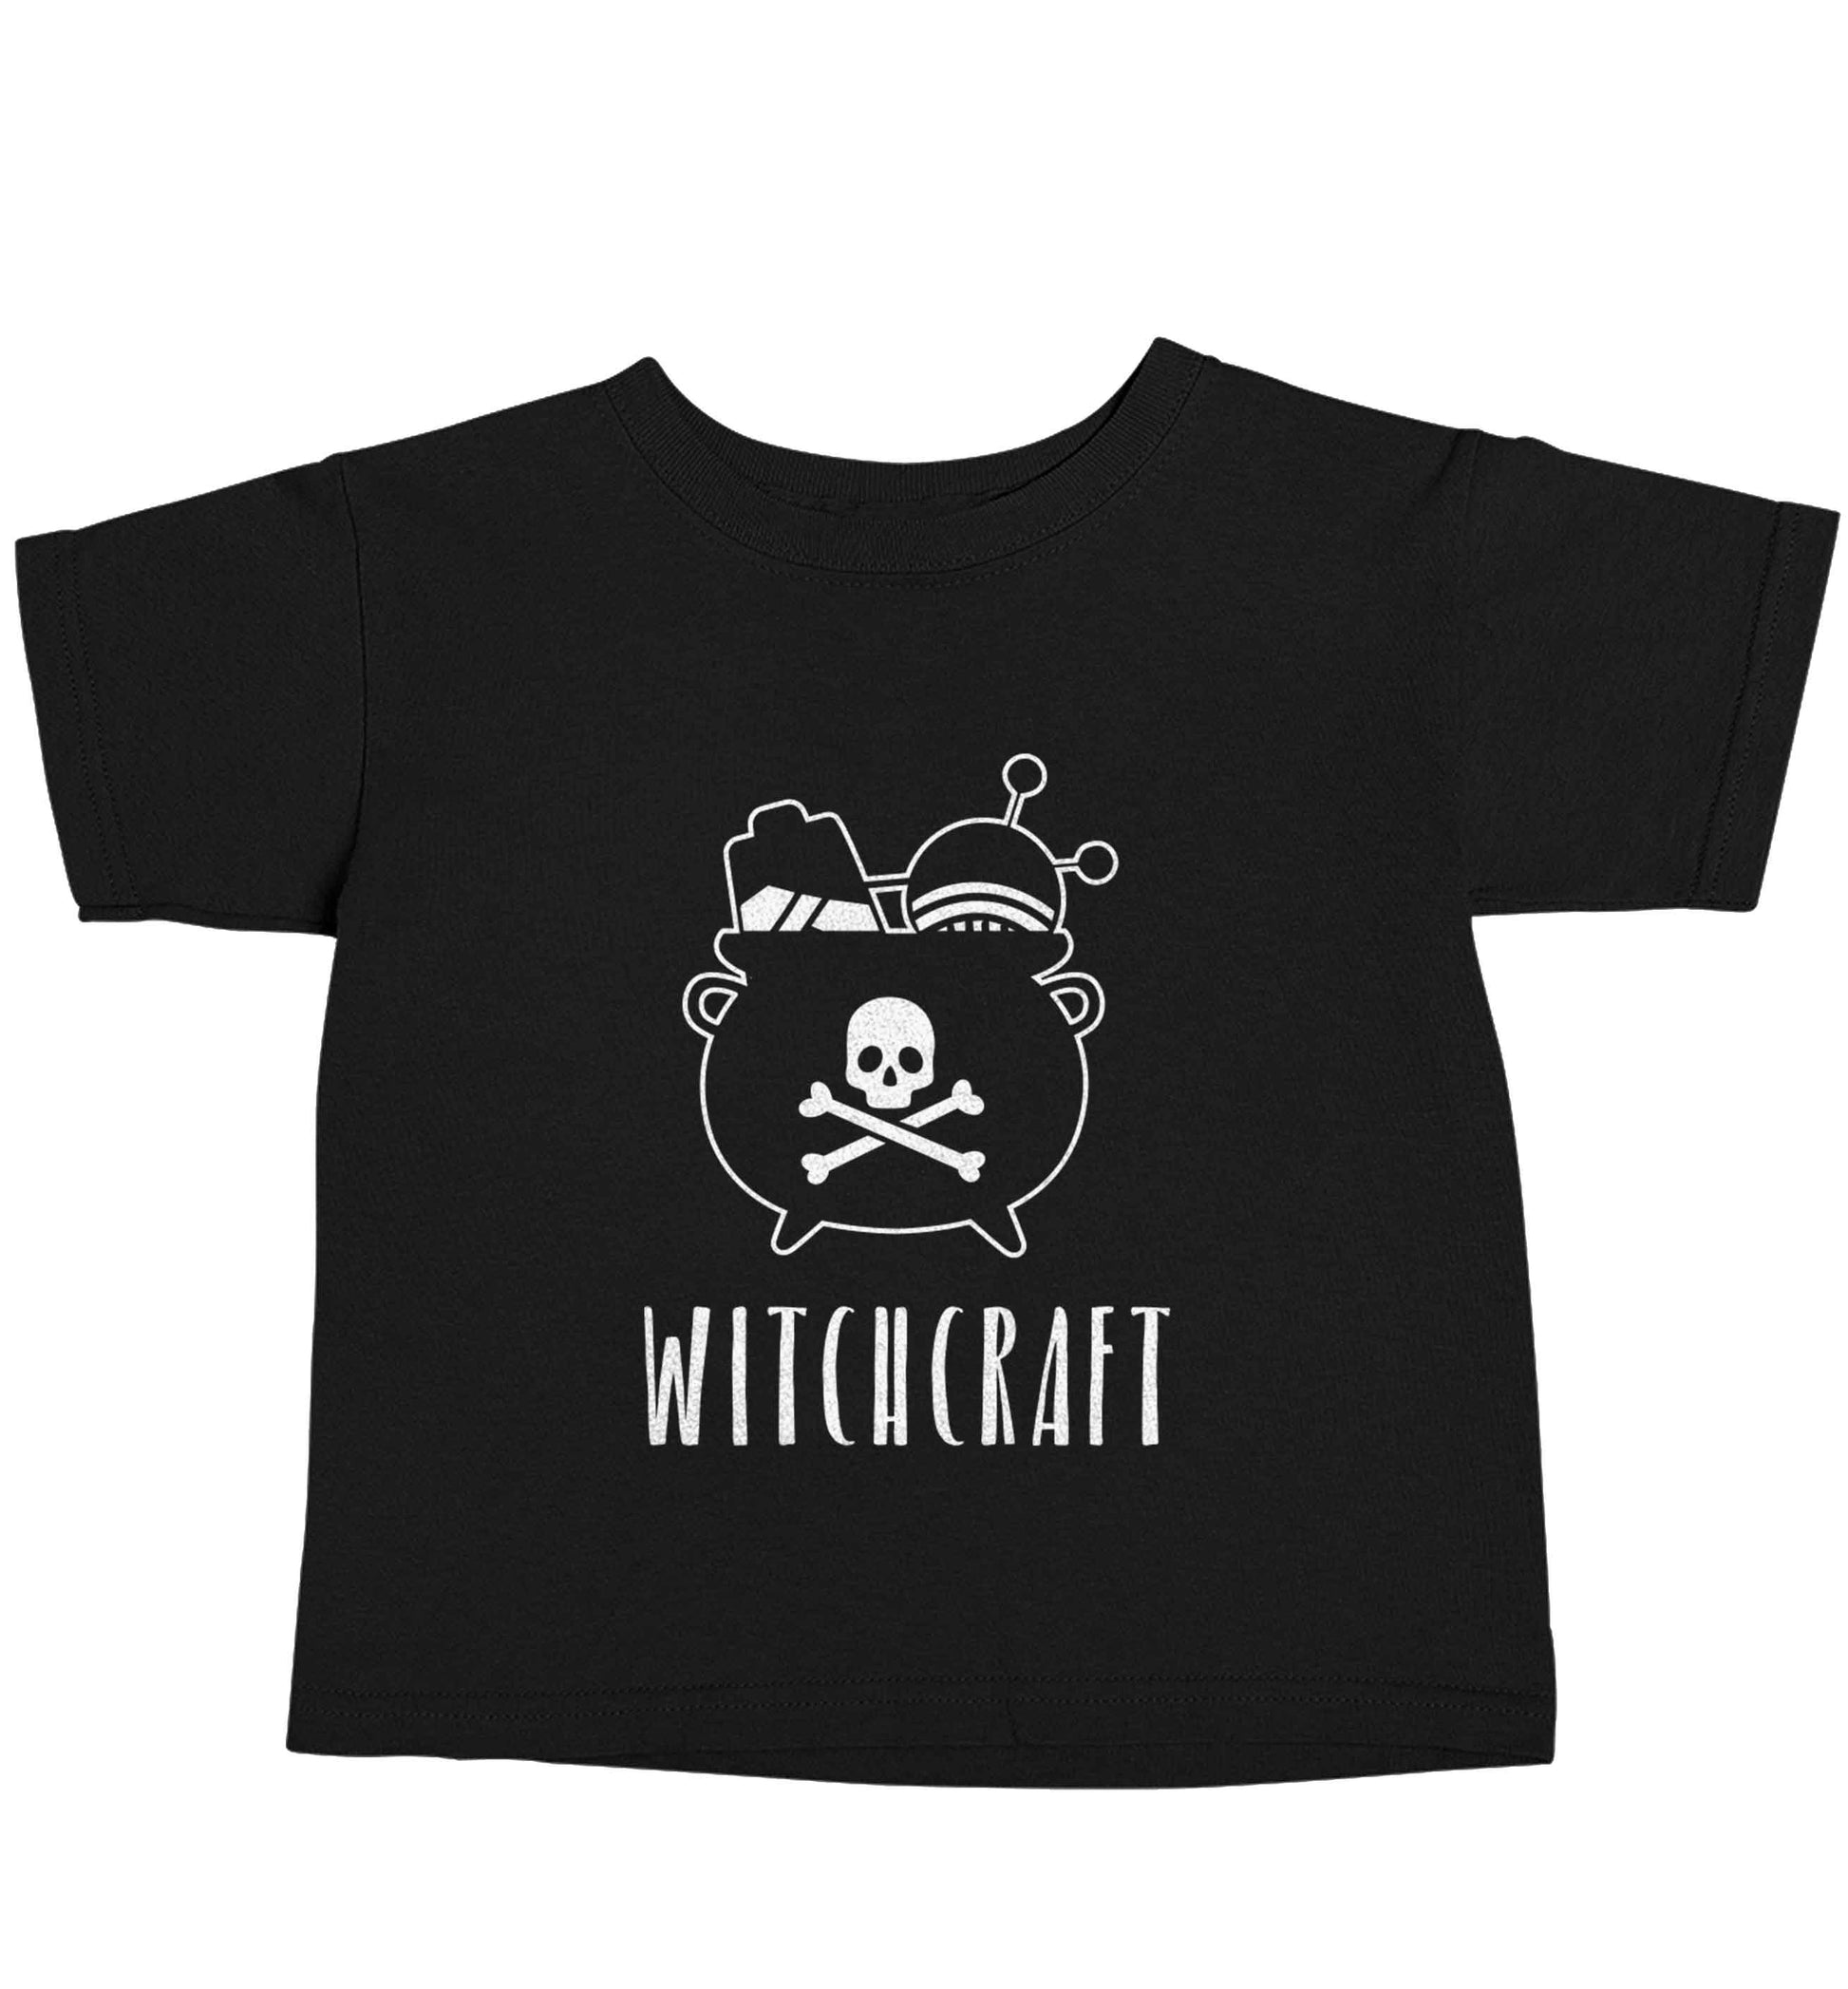 Witchcraft Black baby toddler Tshirt 2 years